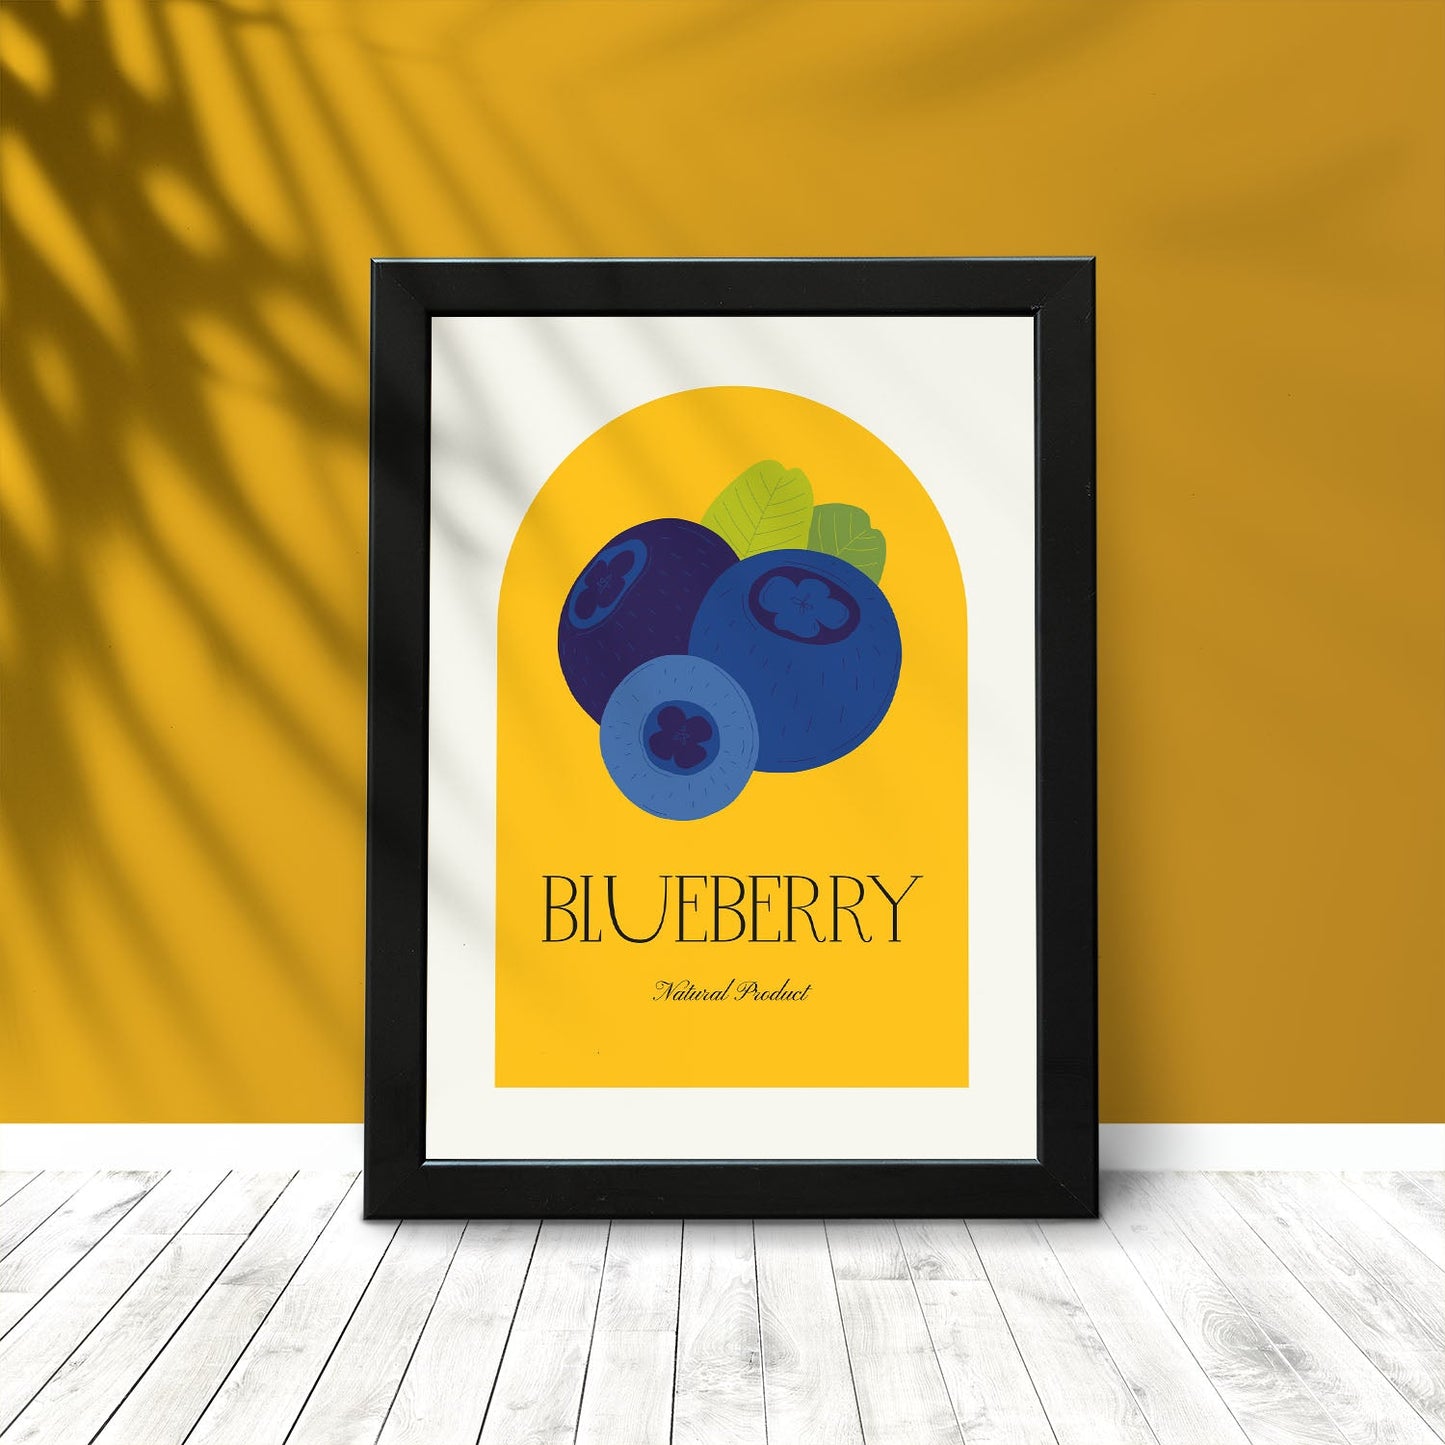 Blueberry-Artwork-Nacnic-Nacnic Estudio SL